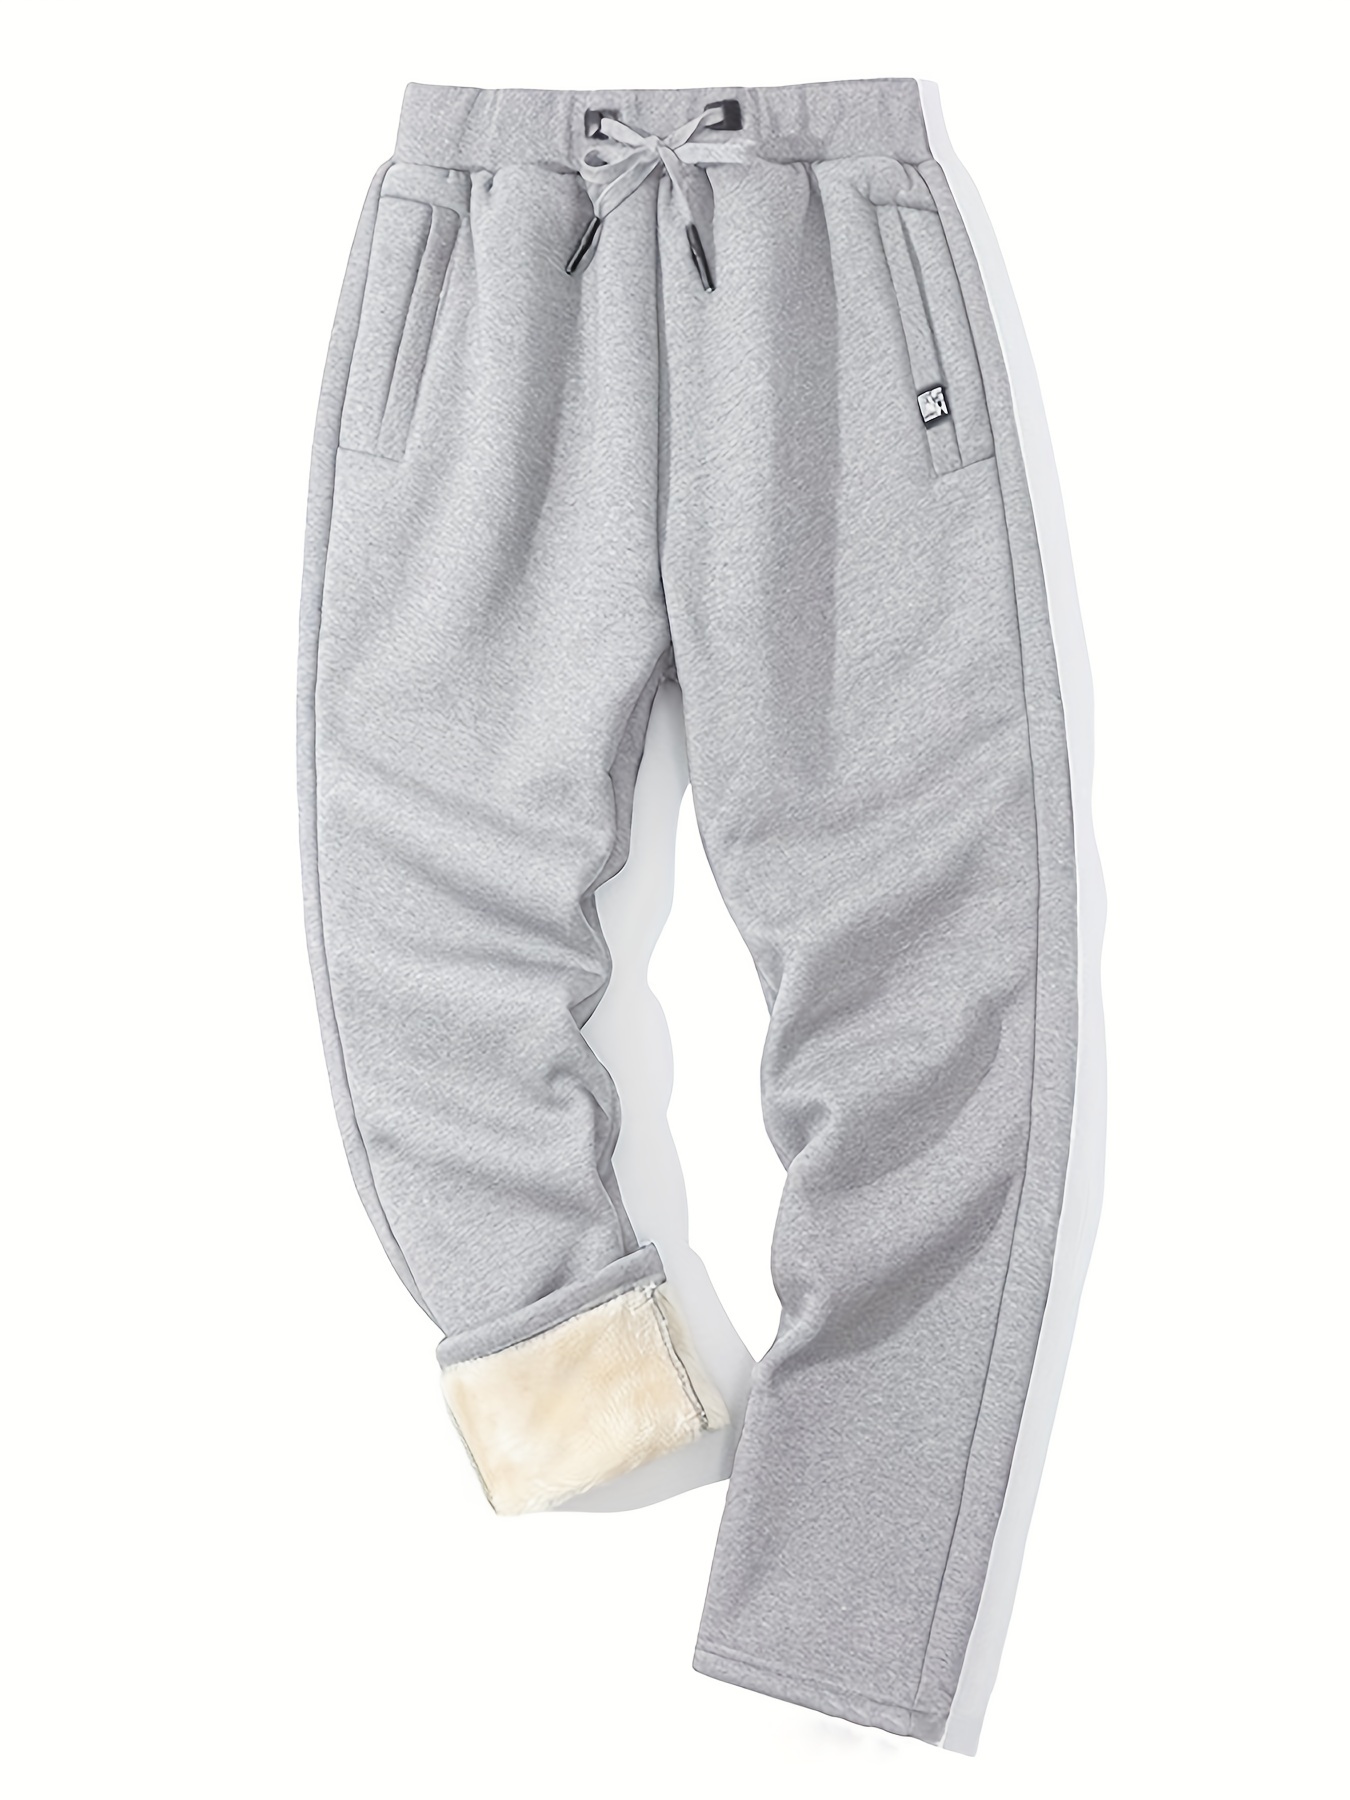  Men's Warm Fleece Lined Athletic Sweatpants Winter